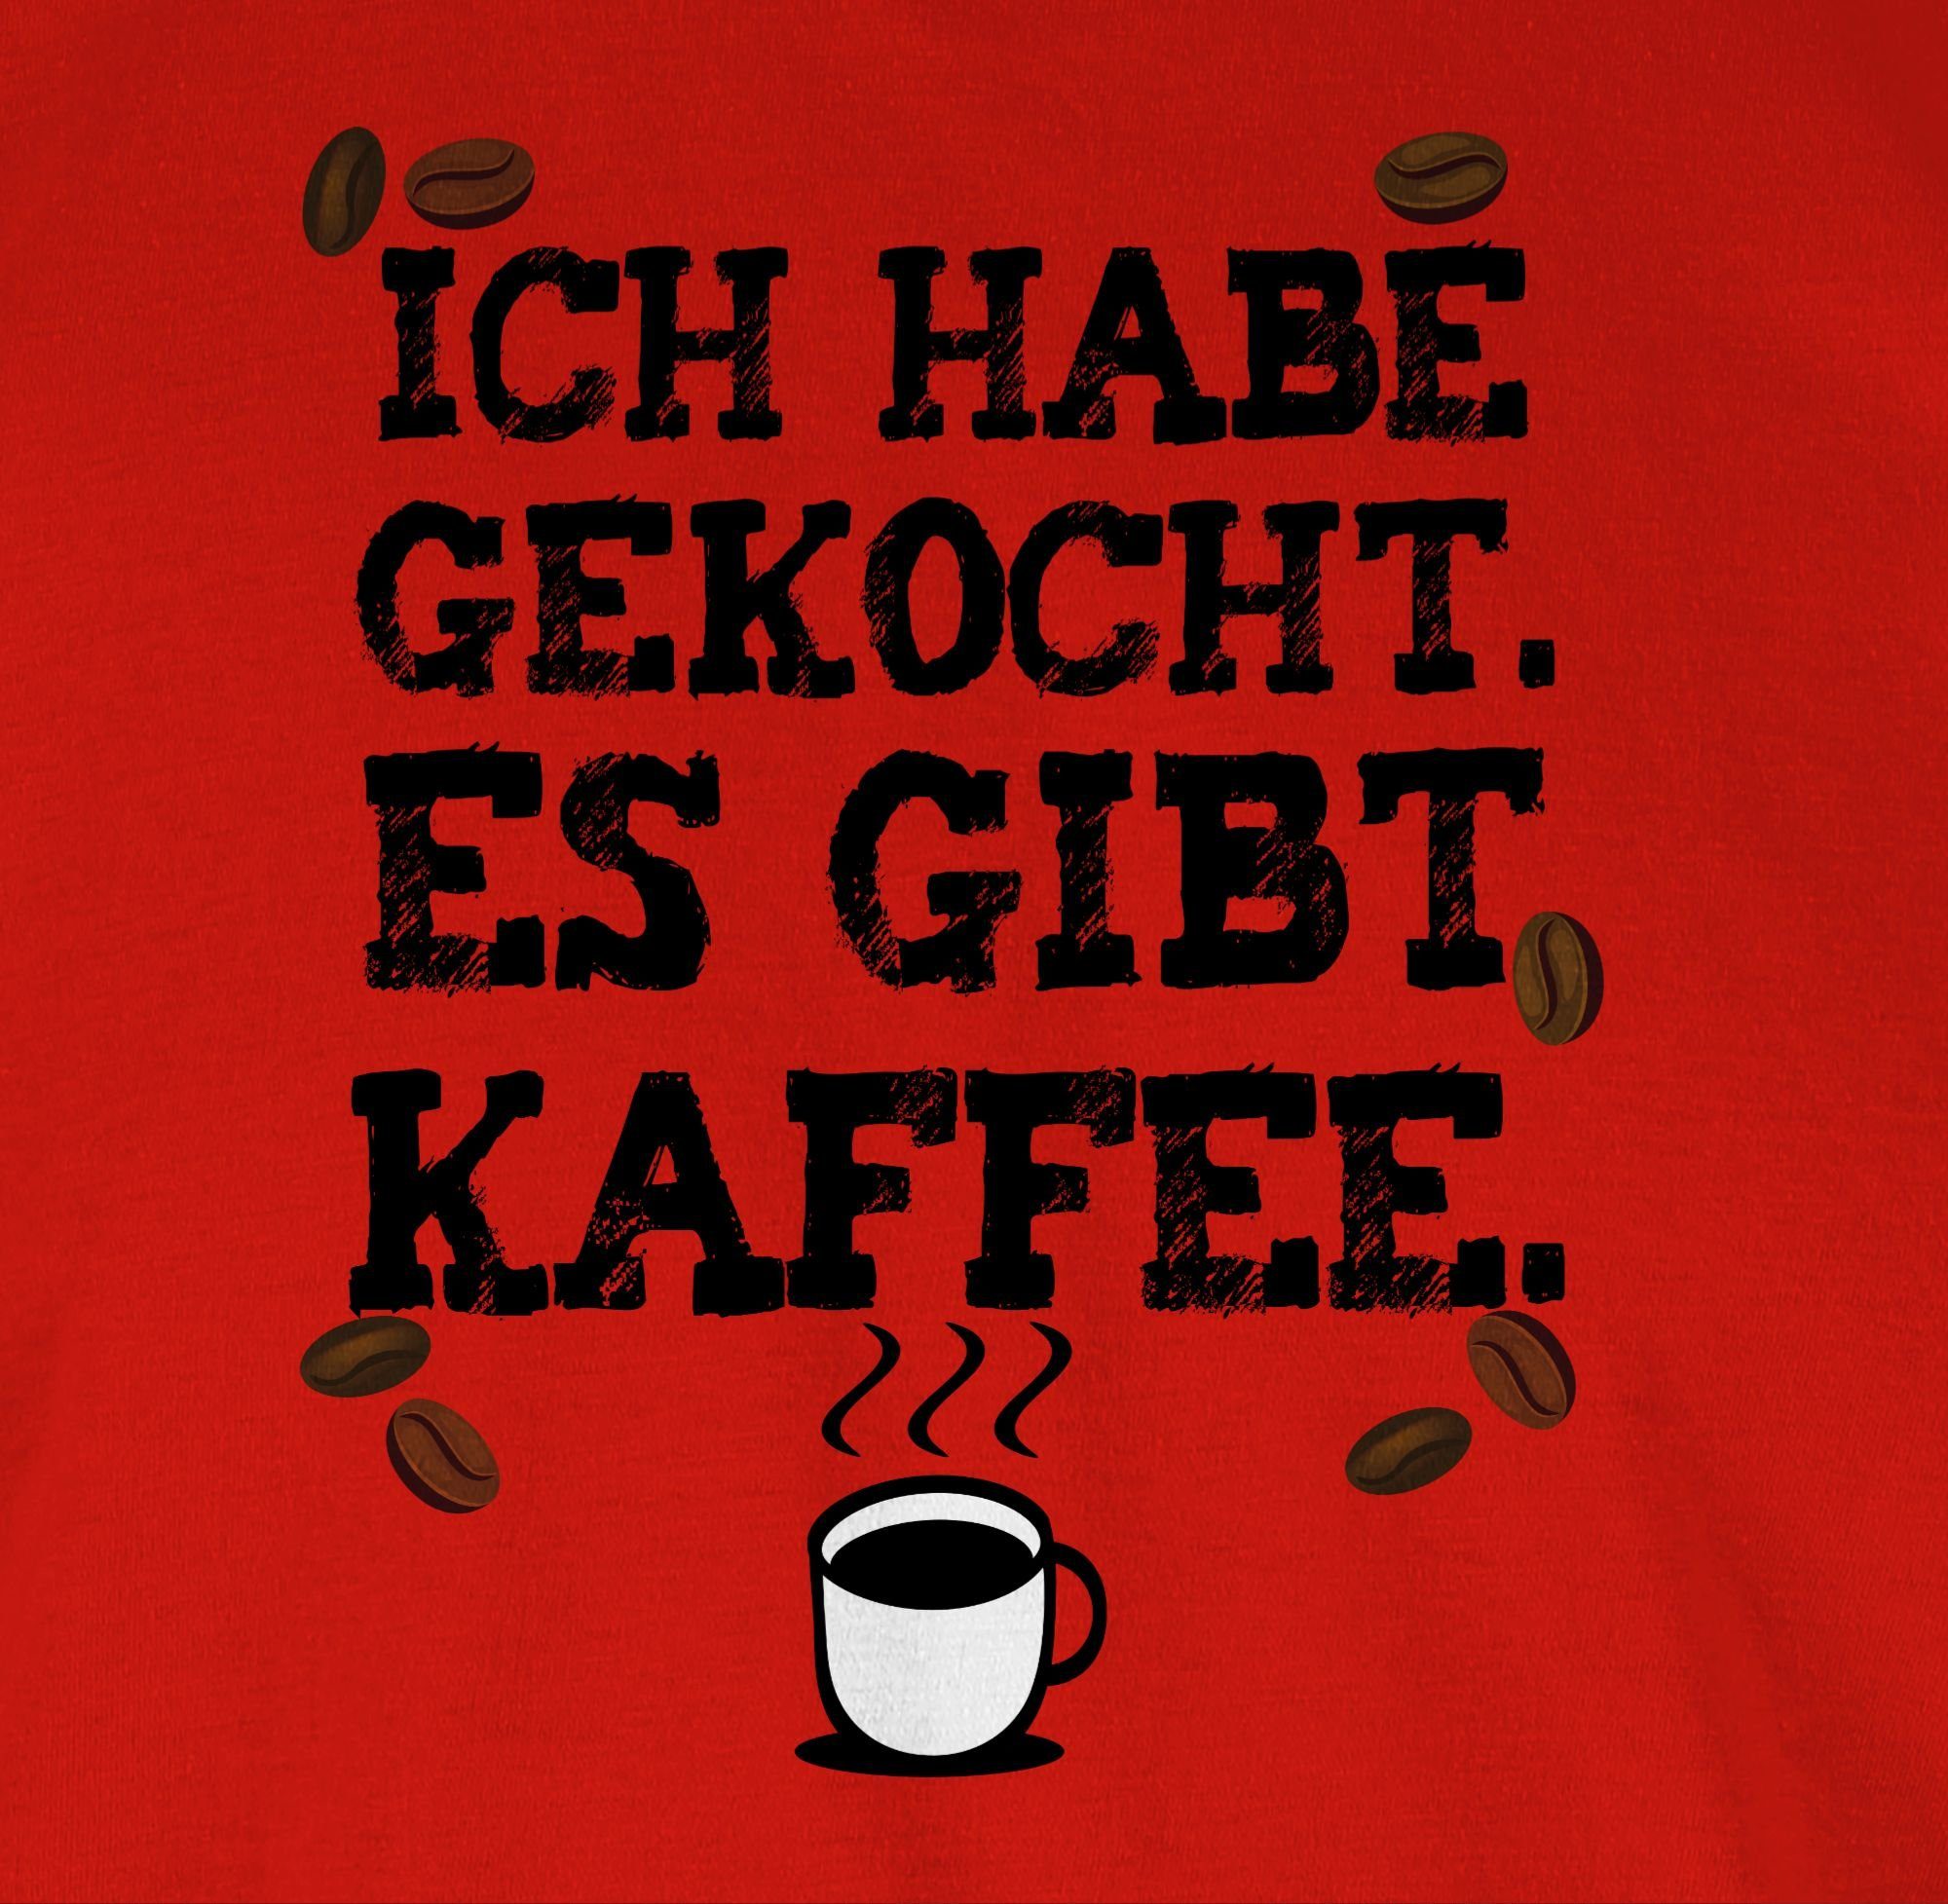 01 Ich Es - Kaffeeliebhaber Gesc Kaffeejunkies gekocht. Rot Kaffee gibt T-Shirt Shirtracer Küche habe